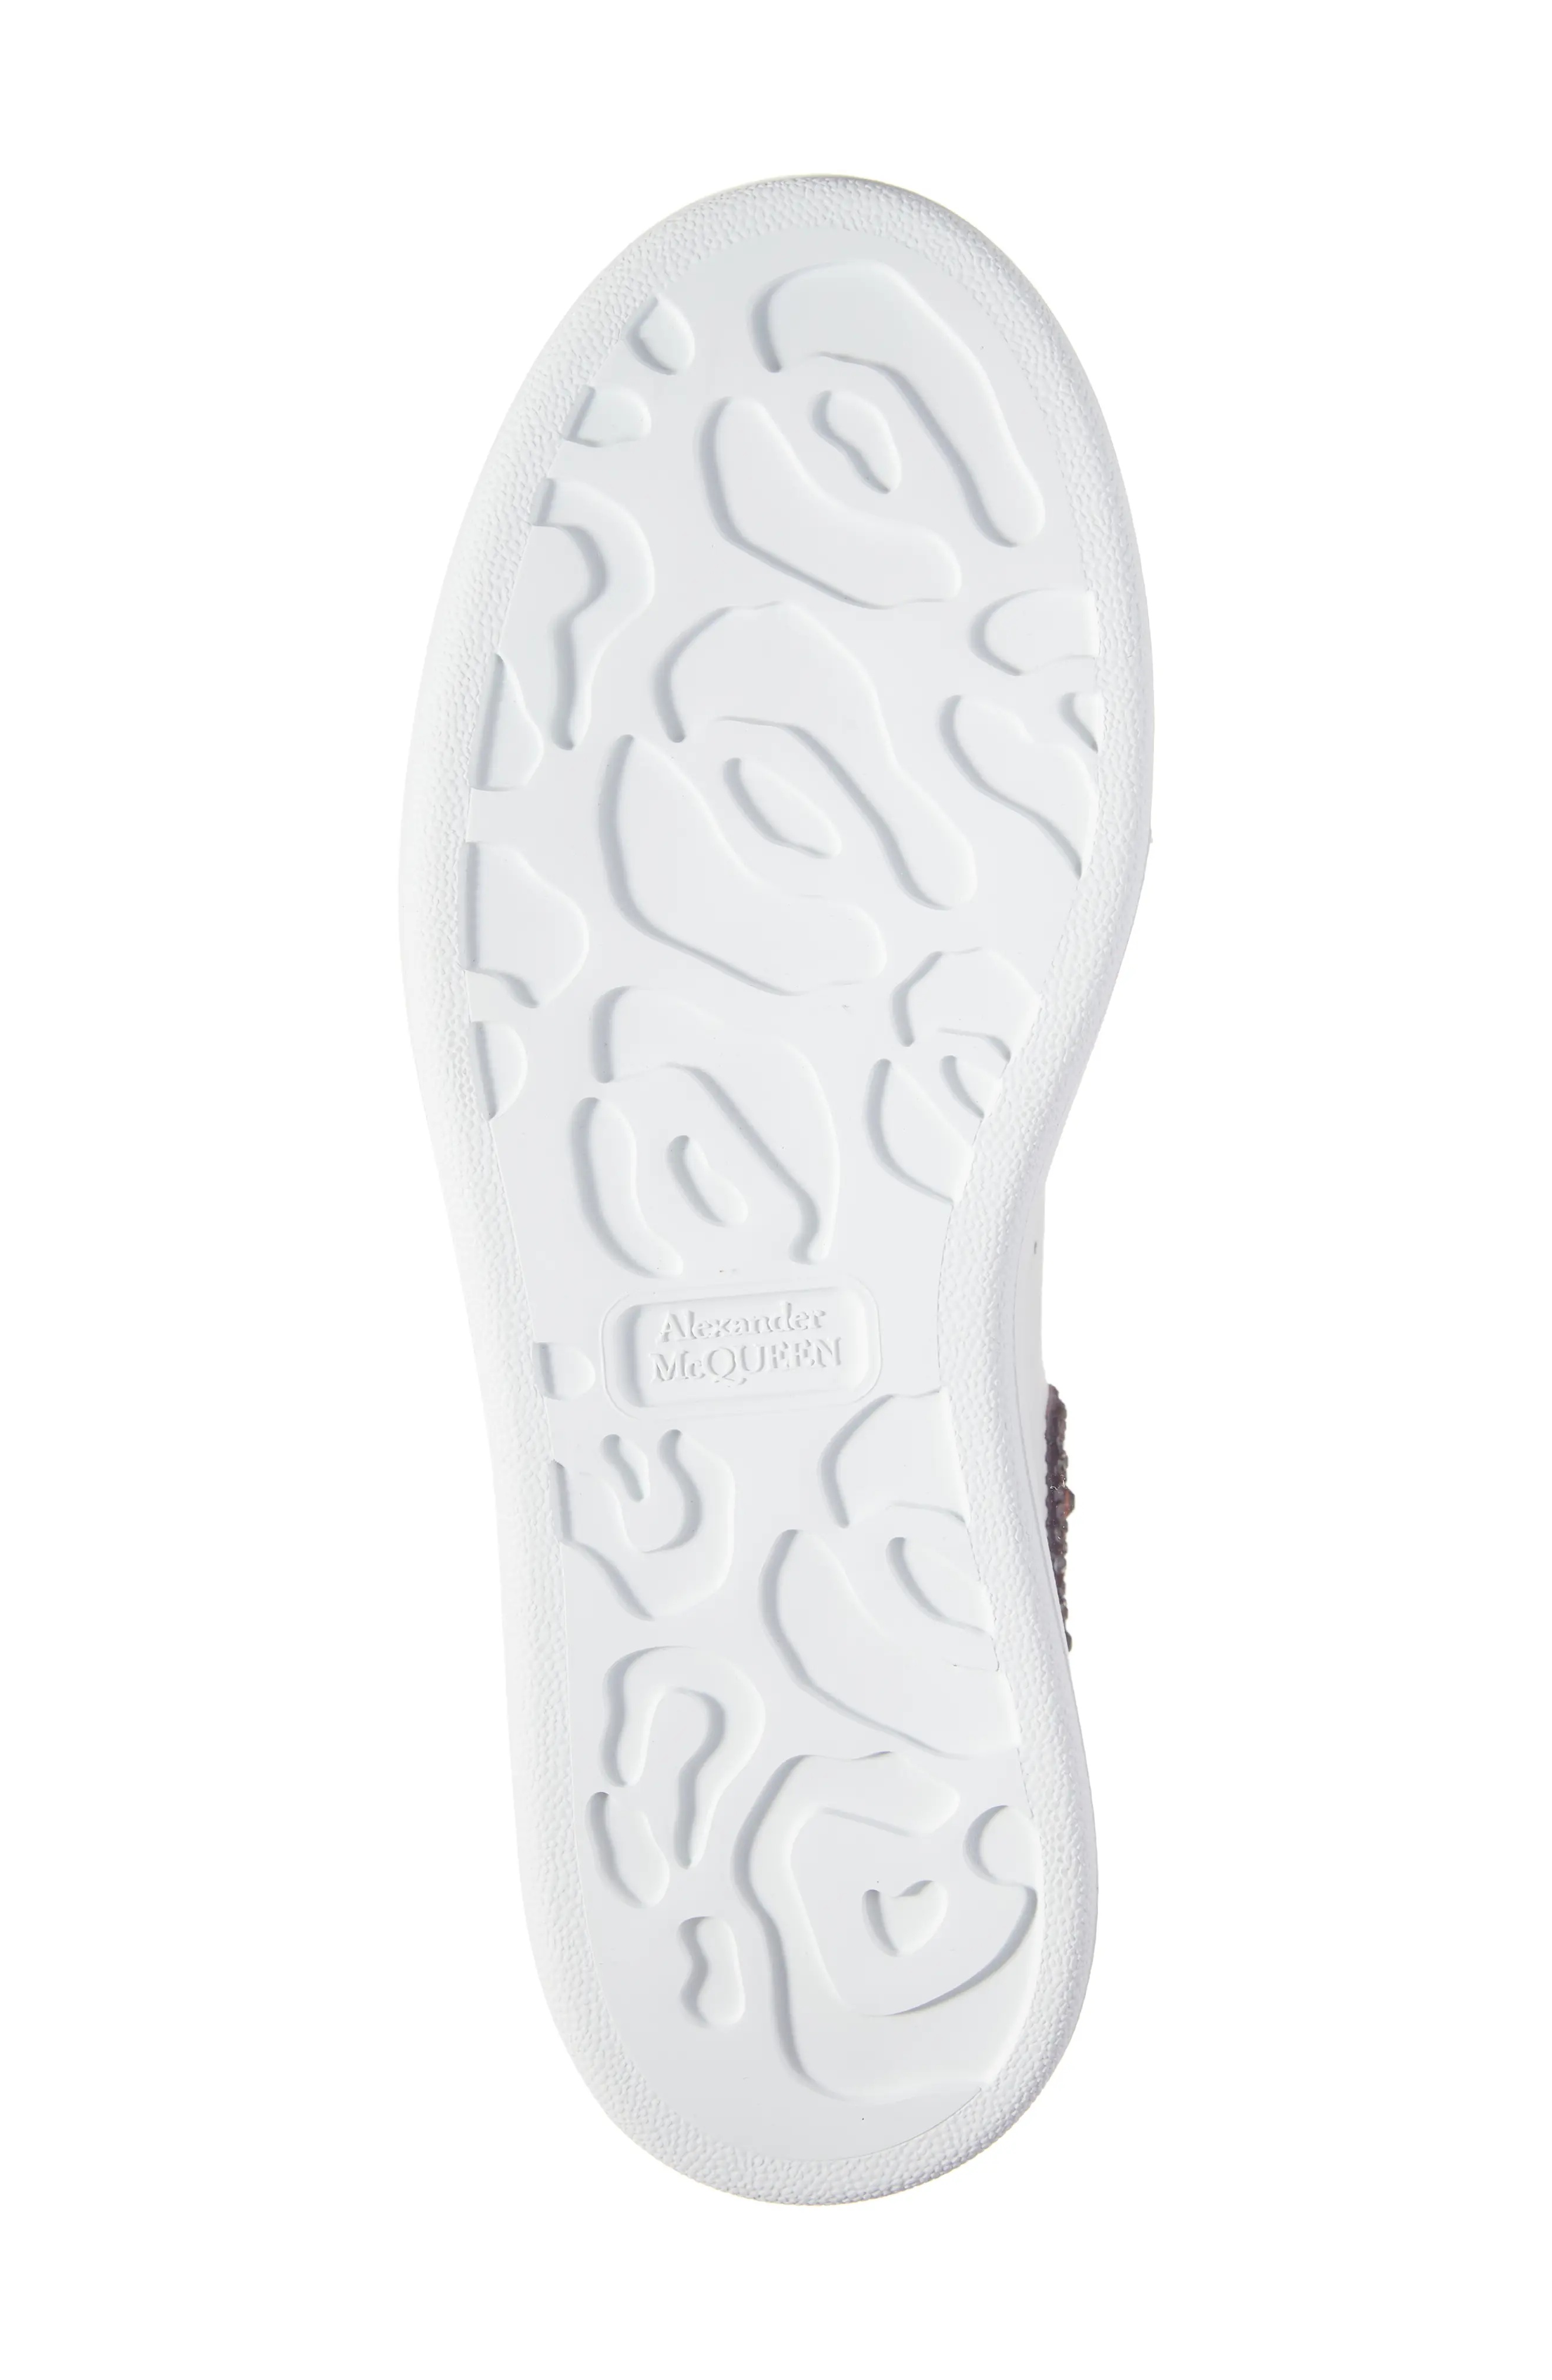 Oversized Crystal Embellished Sneaker in White/Burgundy - 6